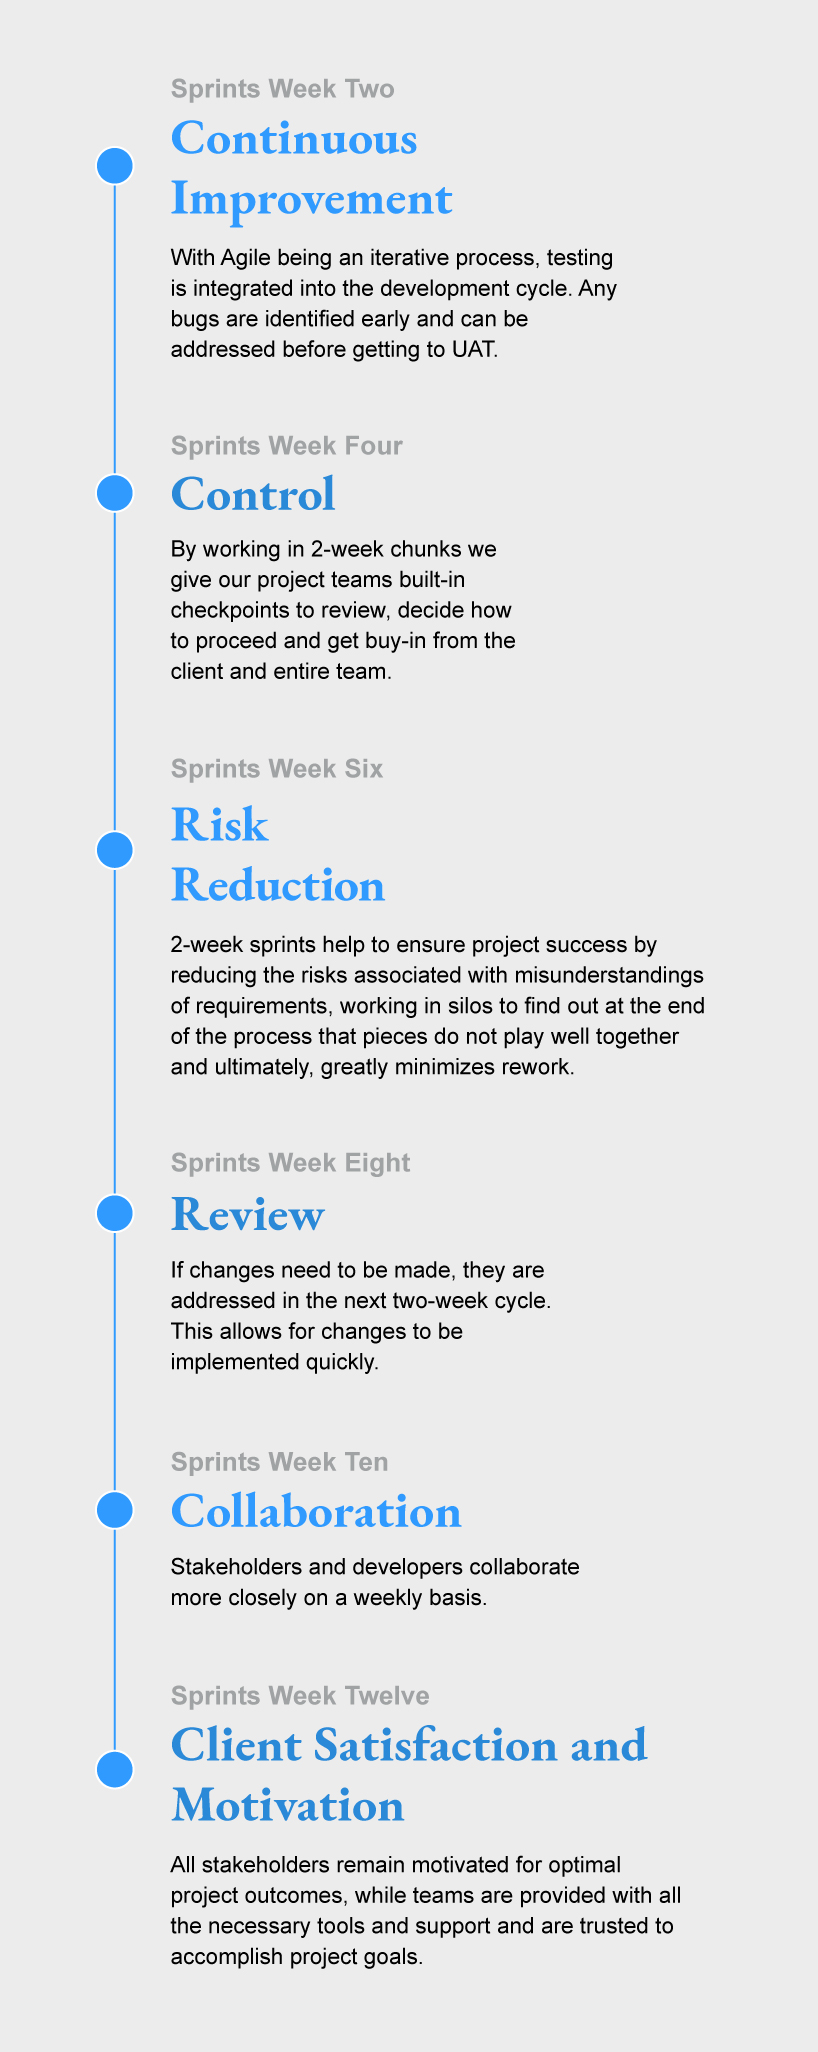 Project Management two-week sprint advantages, Continuous Improvement, Control, Risk Reduction, Review, Collaboration, Client Satisfaction and Motivation